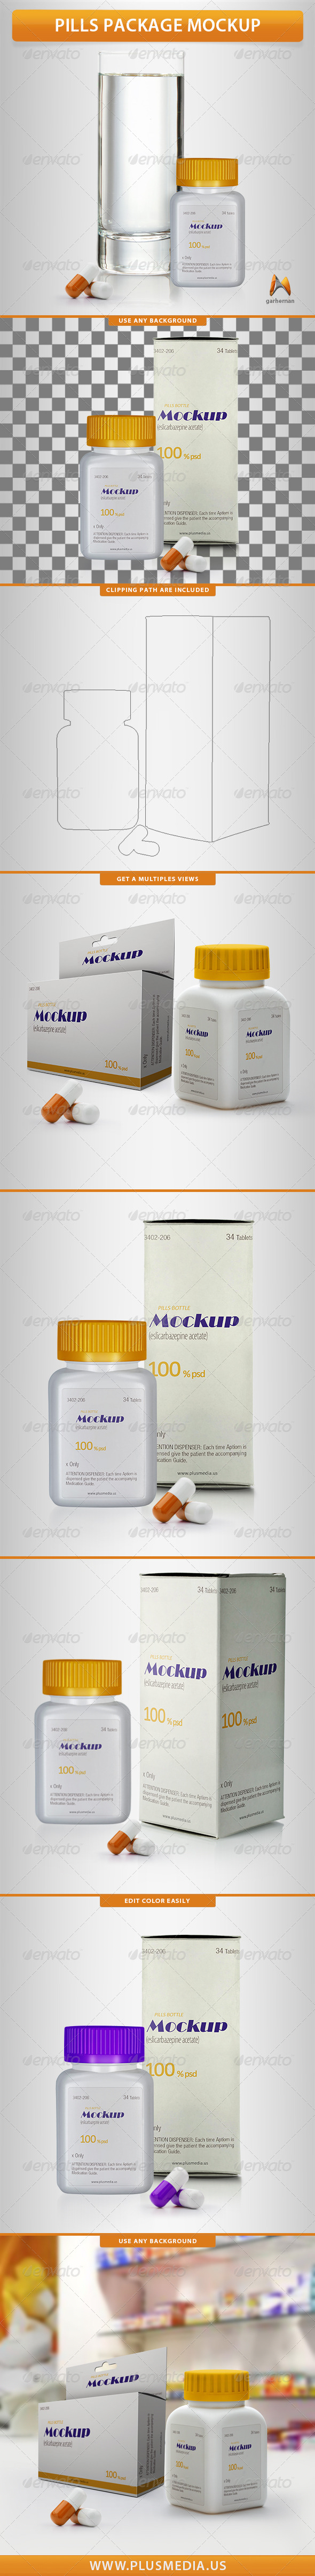 Pills Package Mockup